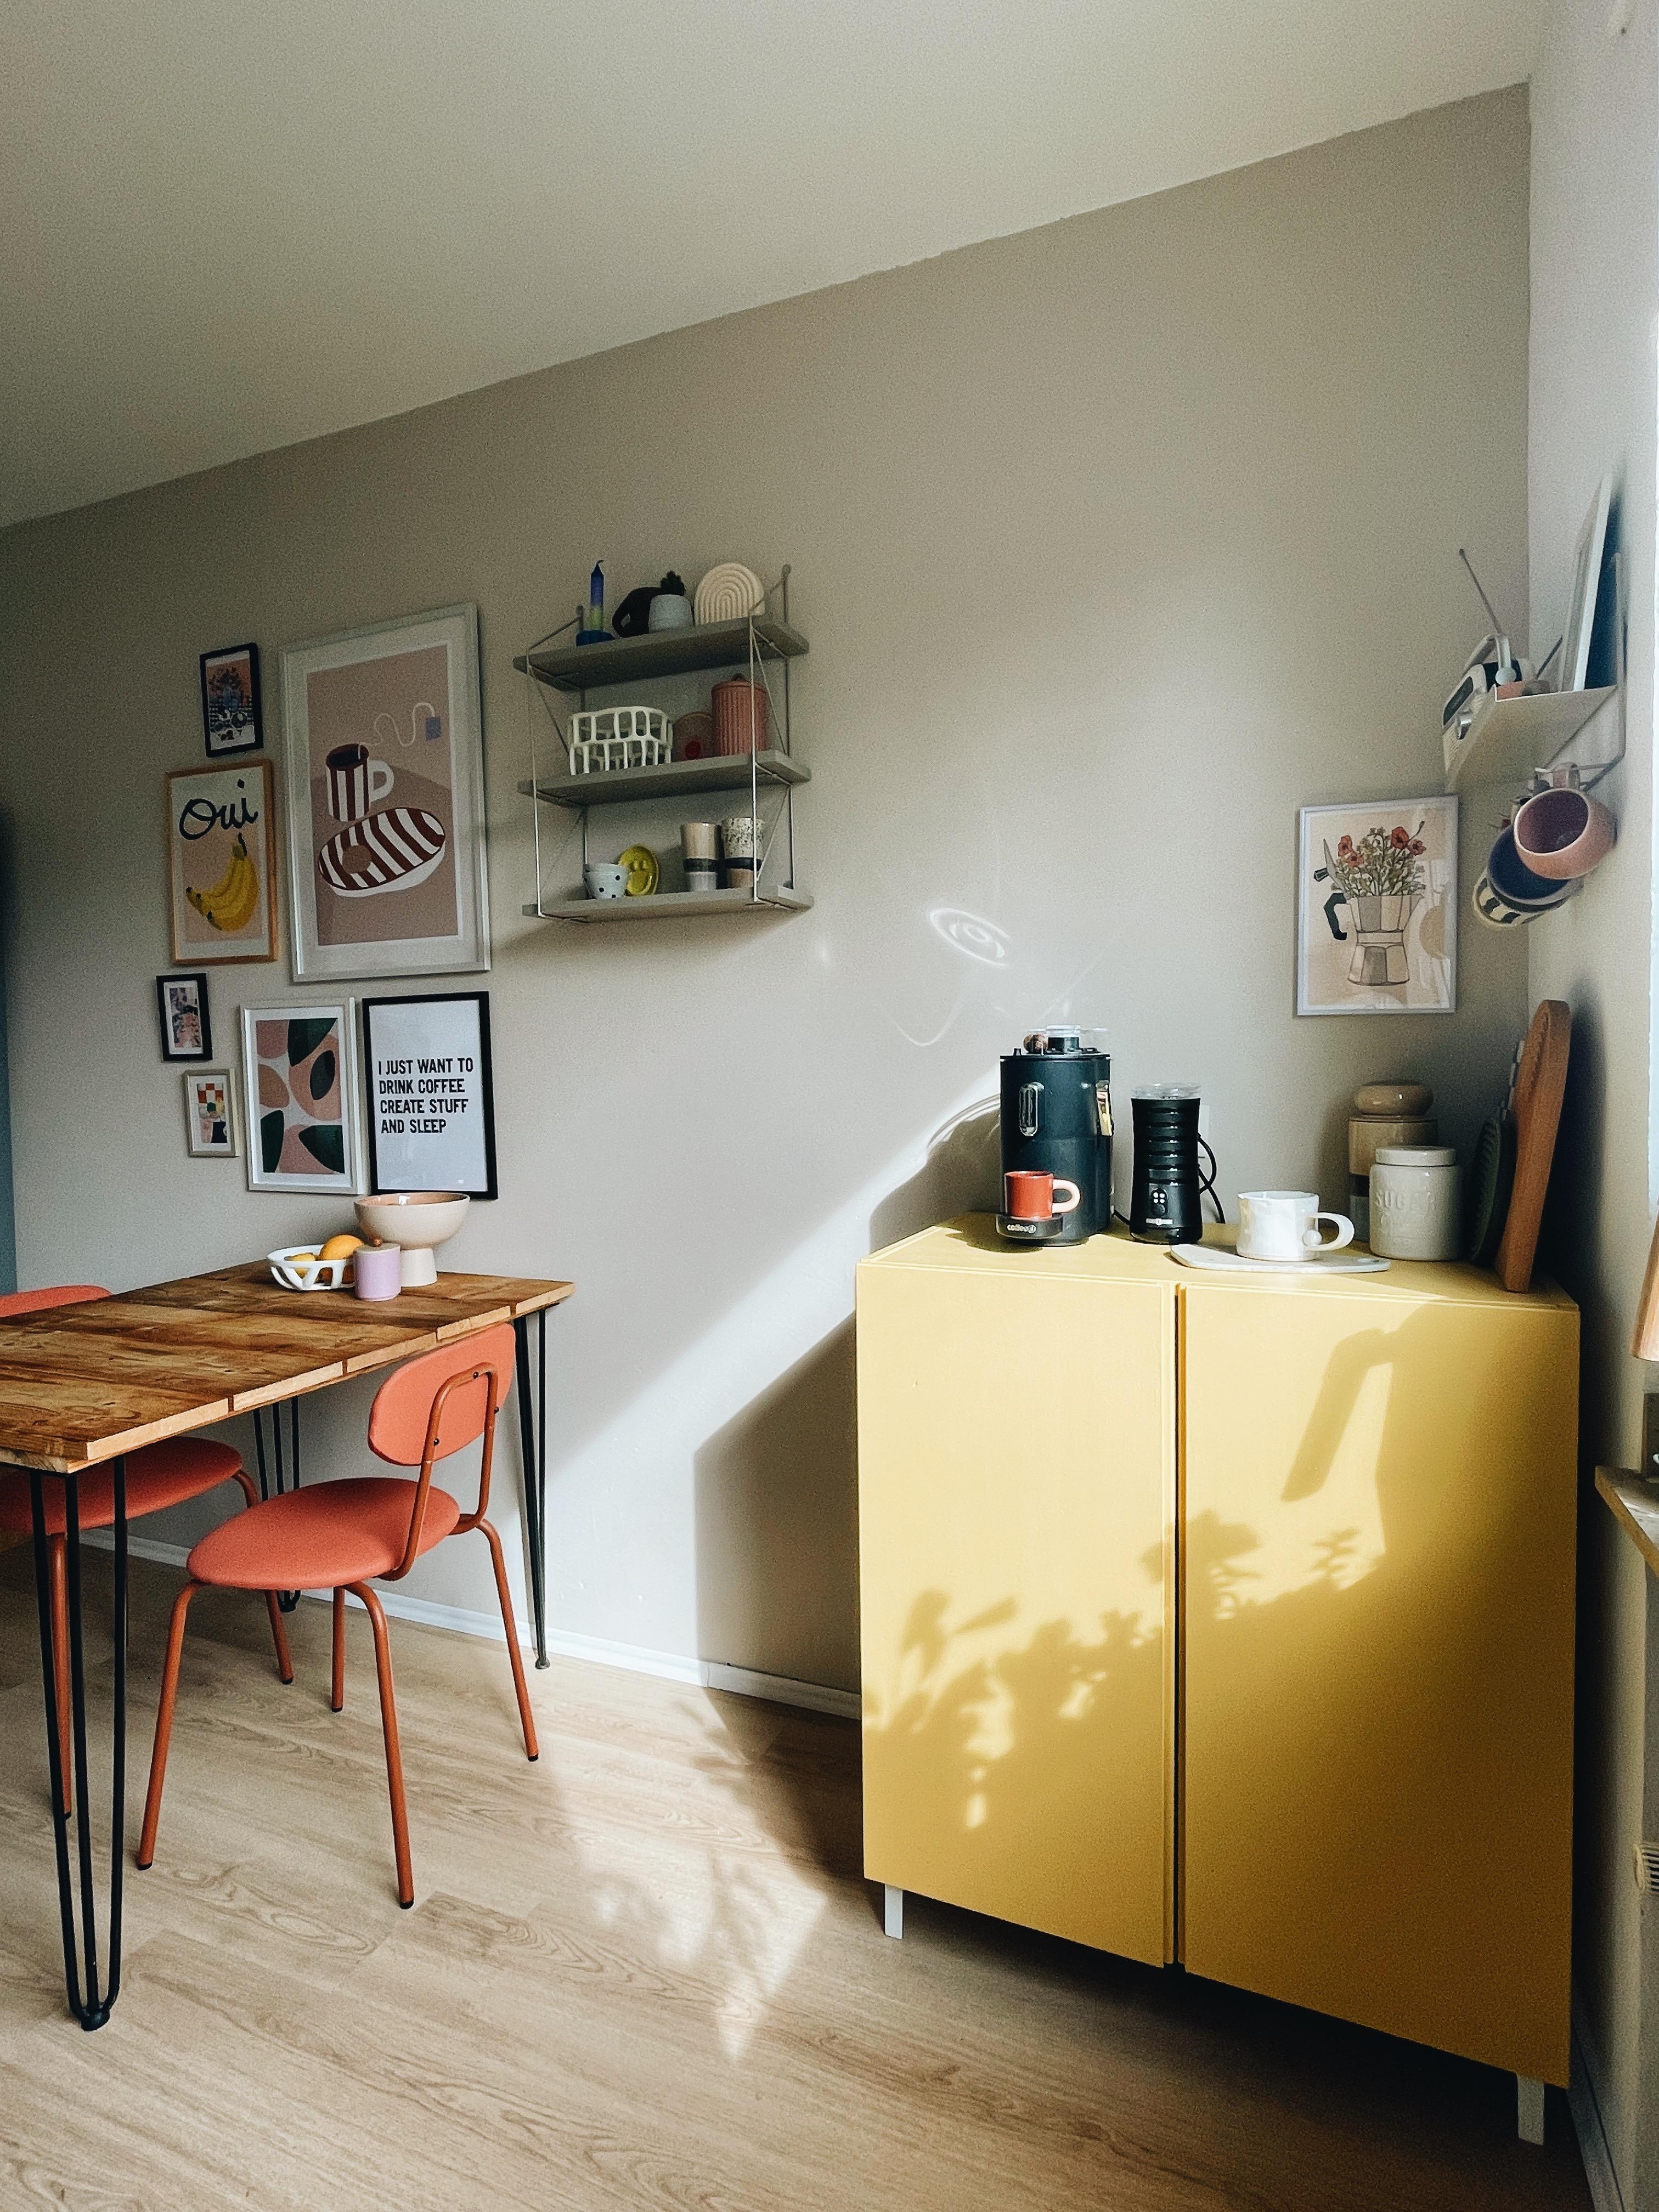 Kaffee-Ecke ☕️☀️
#küche #kitchenview #ivardiy #ivar #farben #colours #coffee #coffeelover #couchliebt